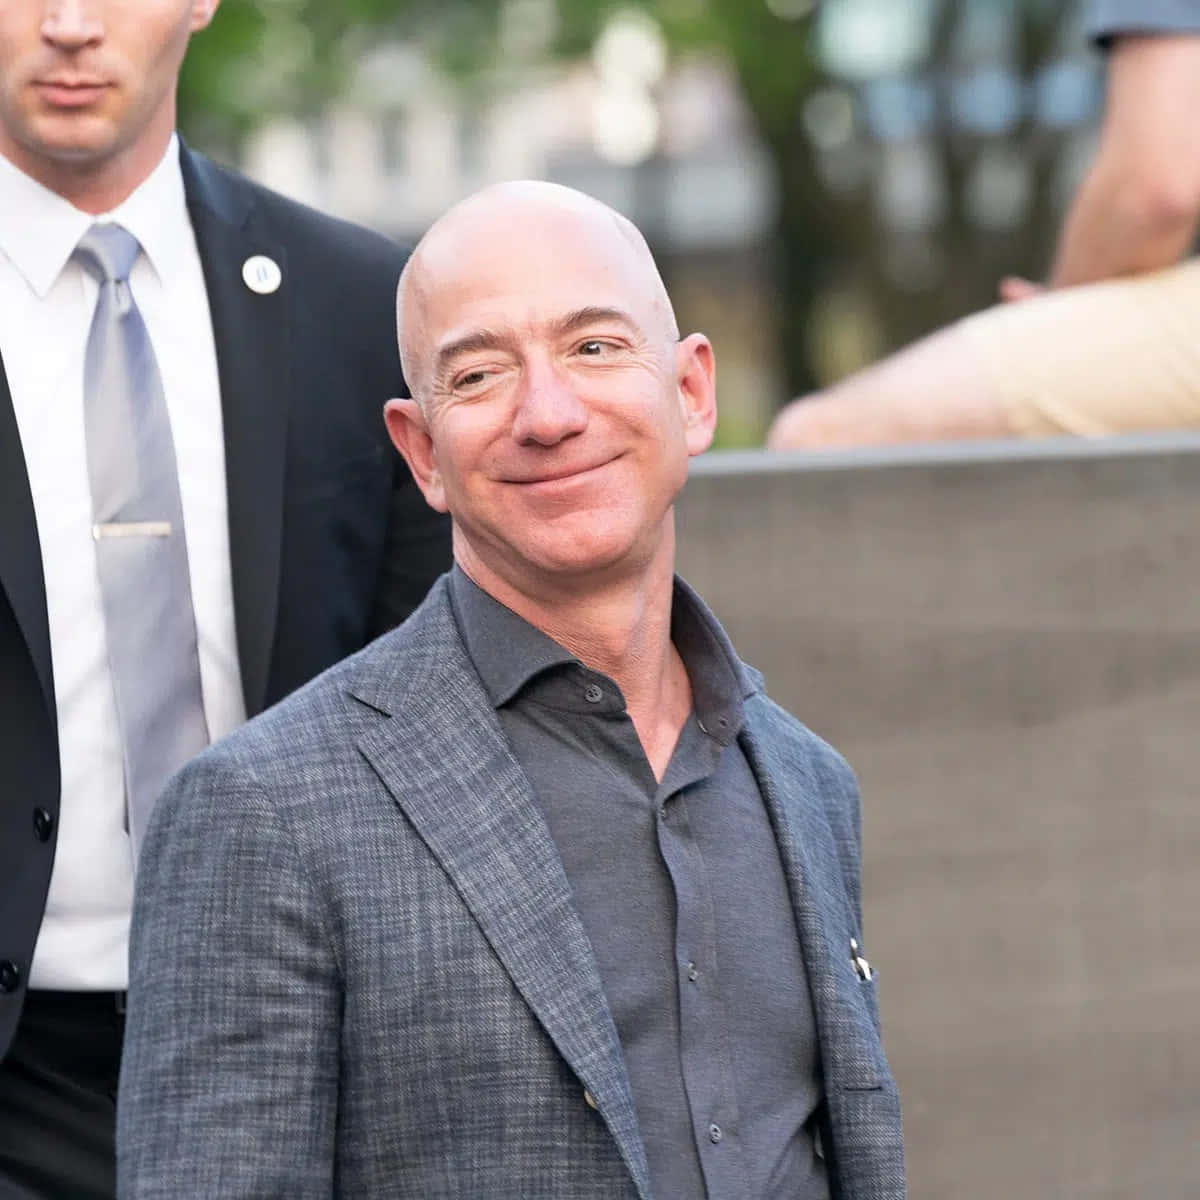 Jeff Bezos, Founder and CEO of Amazon